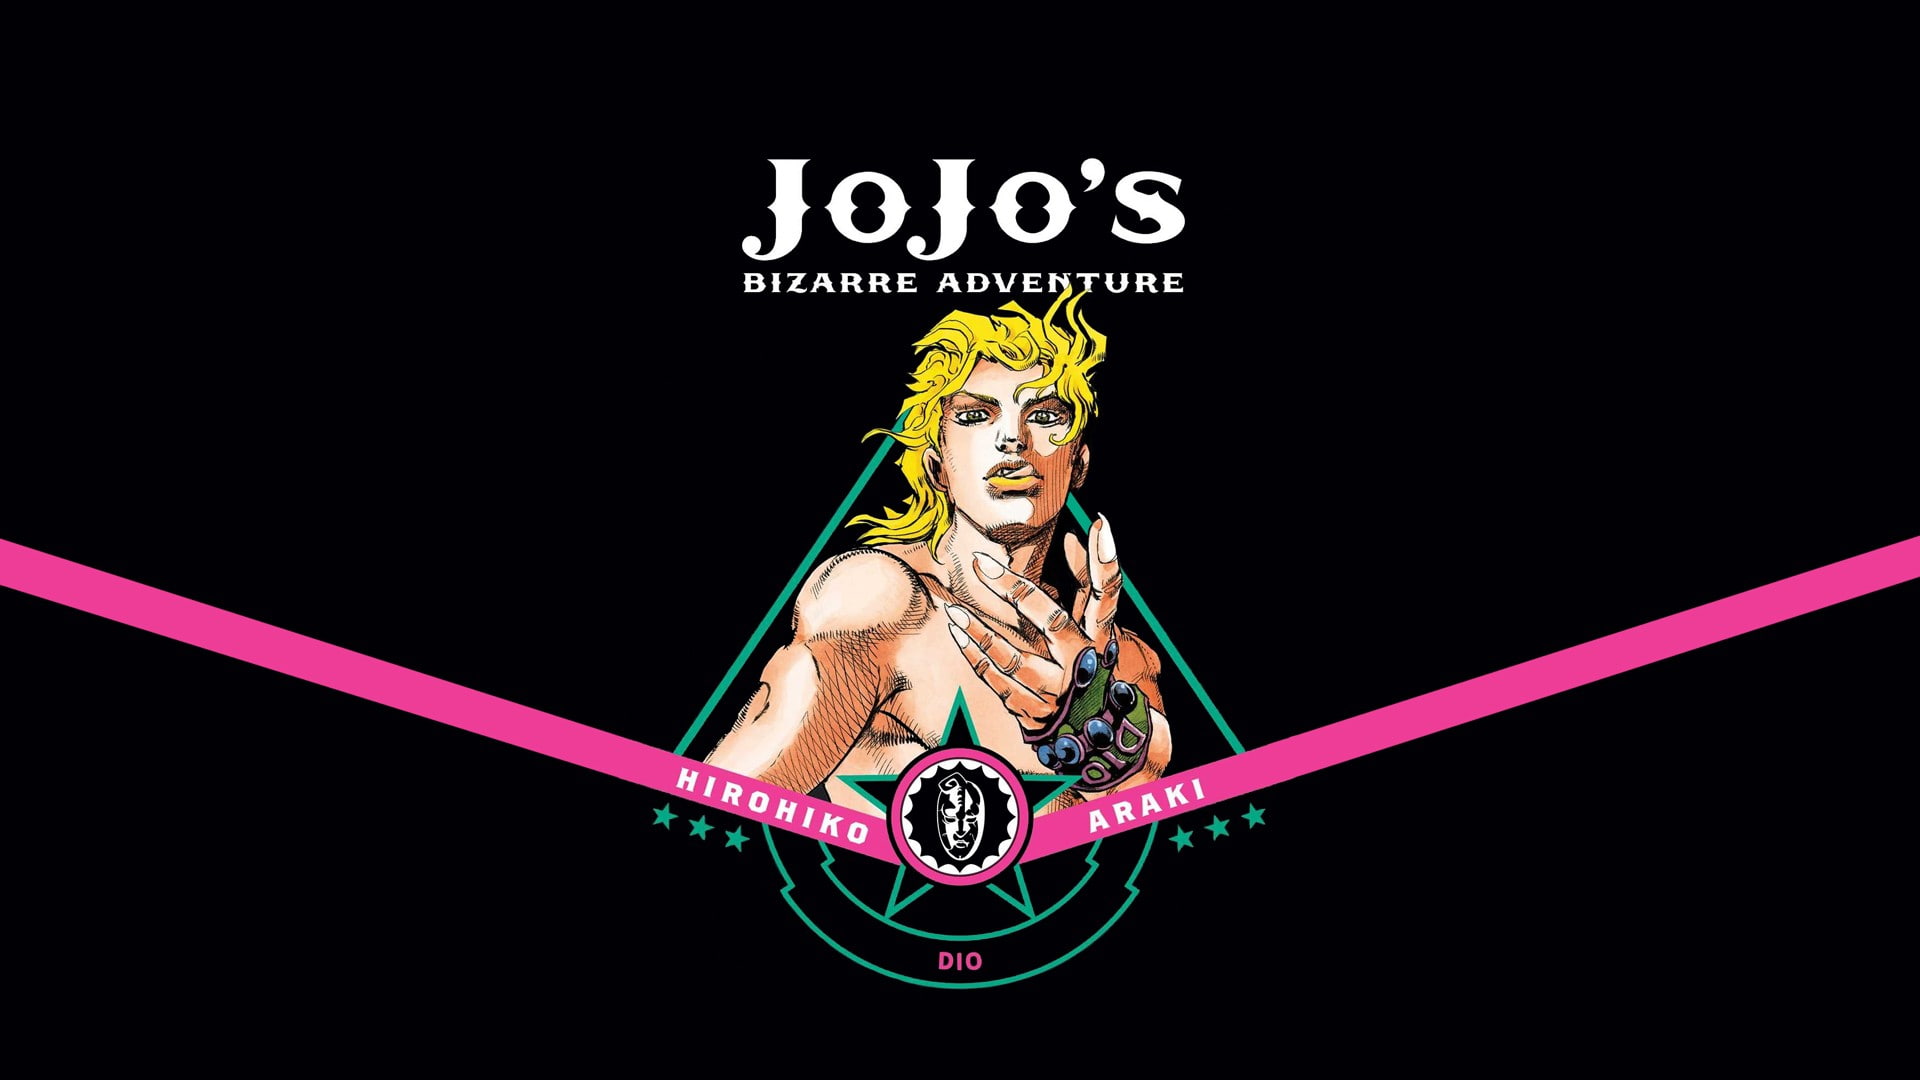 Free Download | Hd Wallpaper: Jojo'S Bizarre Adventure, Dio | Wallpaper